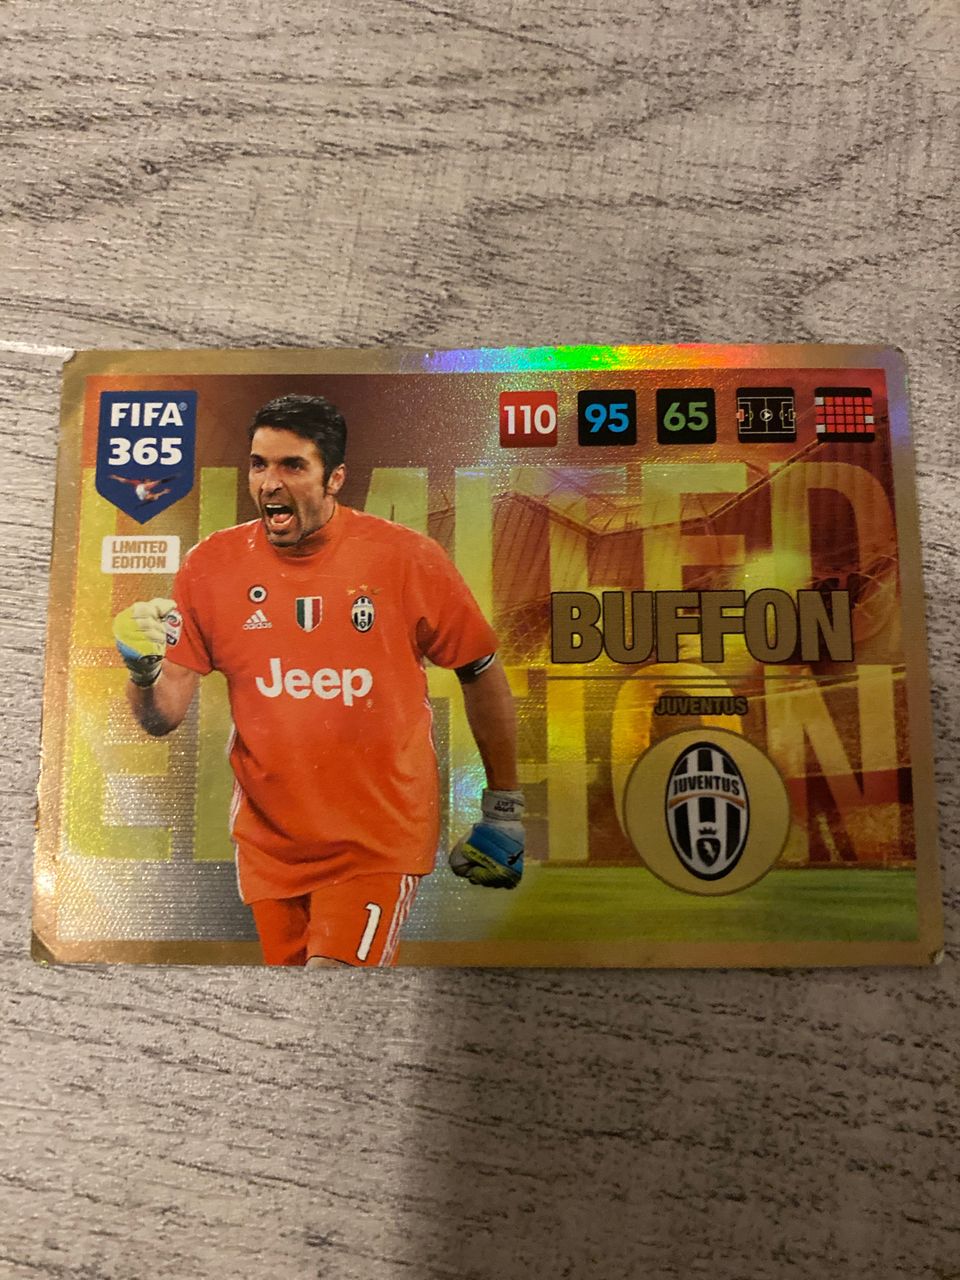 Panini Adrenalyn XL FIFA 365 - 2017 Buffon Limited Edition